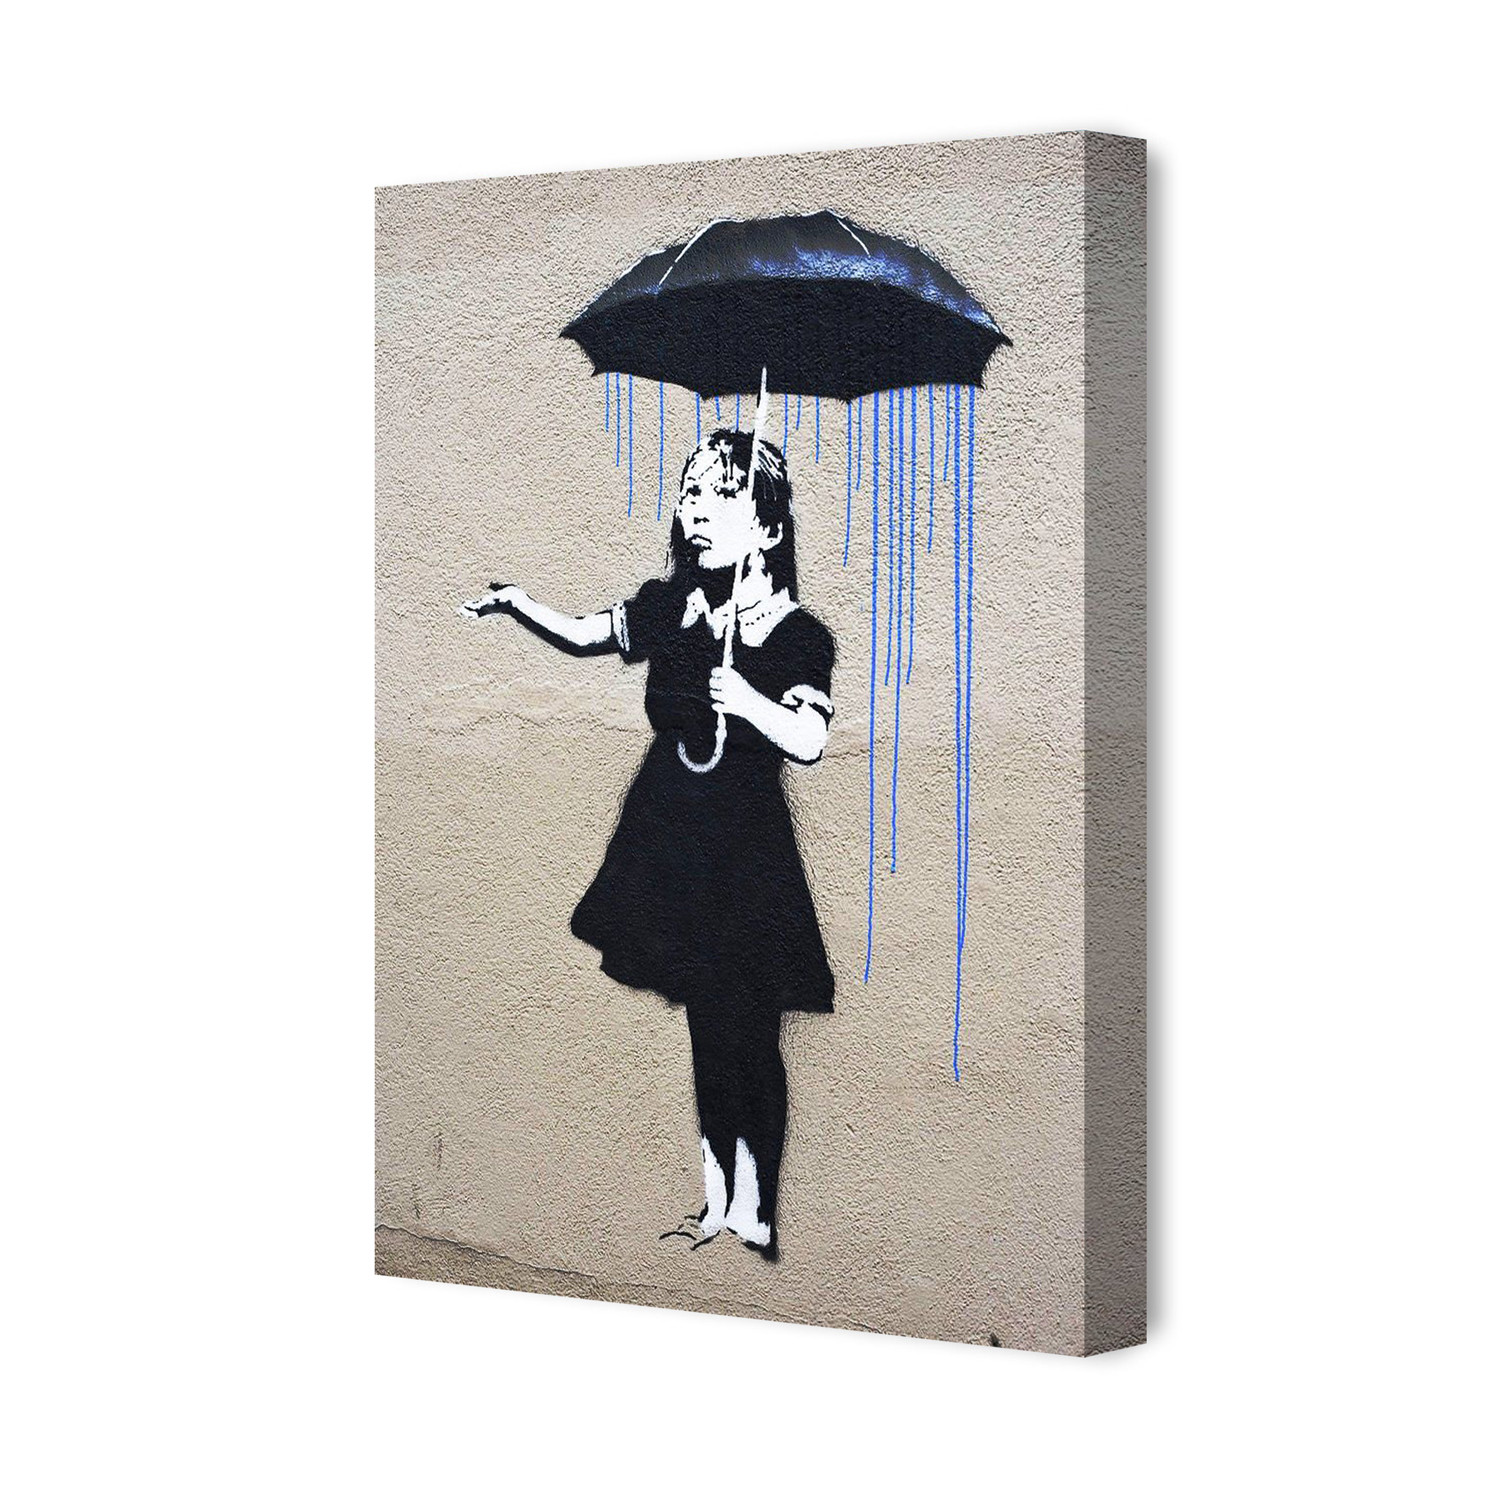 Nola Girl With The Umbrella by Banksy (26